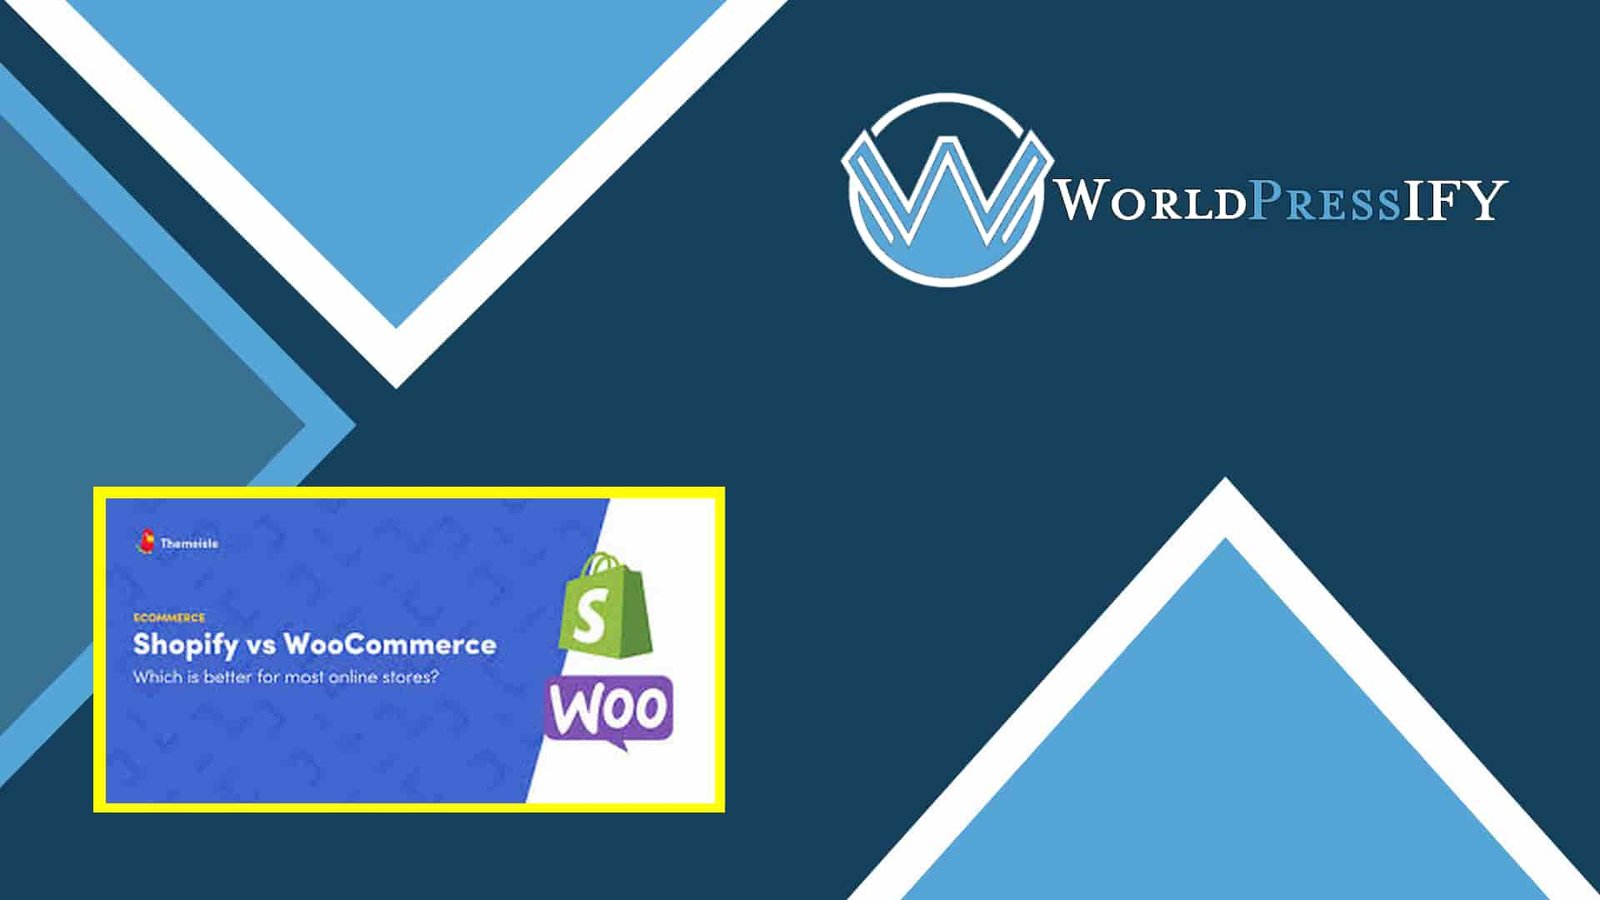 WooCommerce Private Store - WorldPress IFY